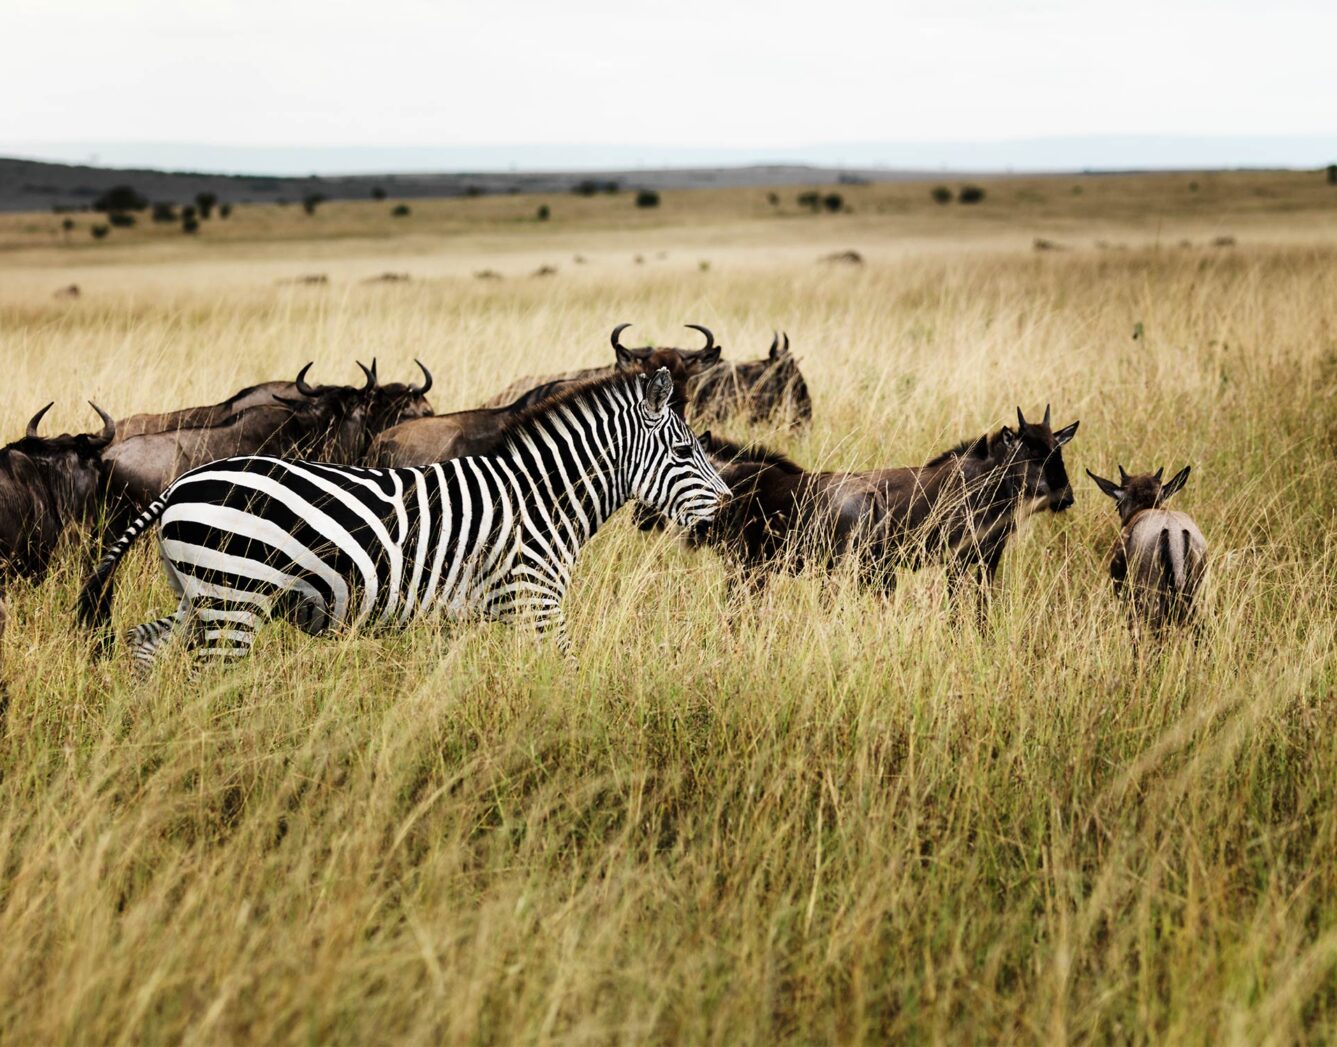 A zebra in the grass with wildebeest behind it